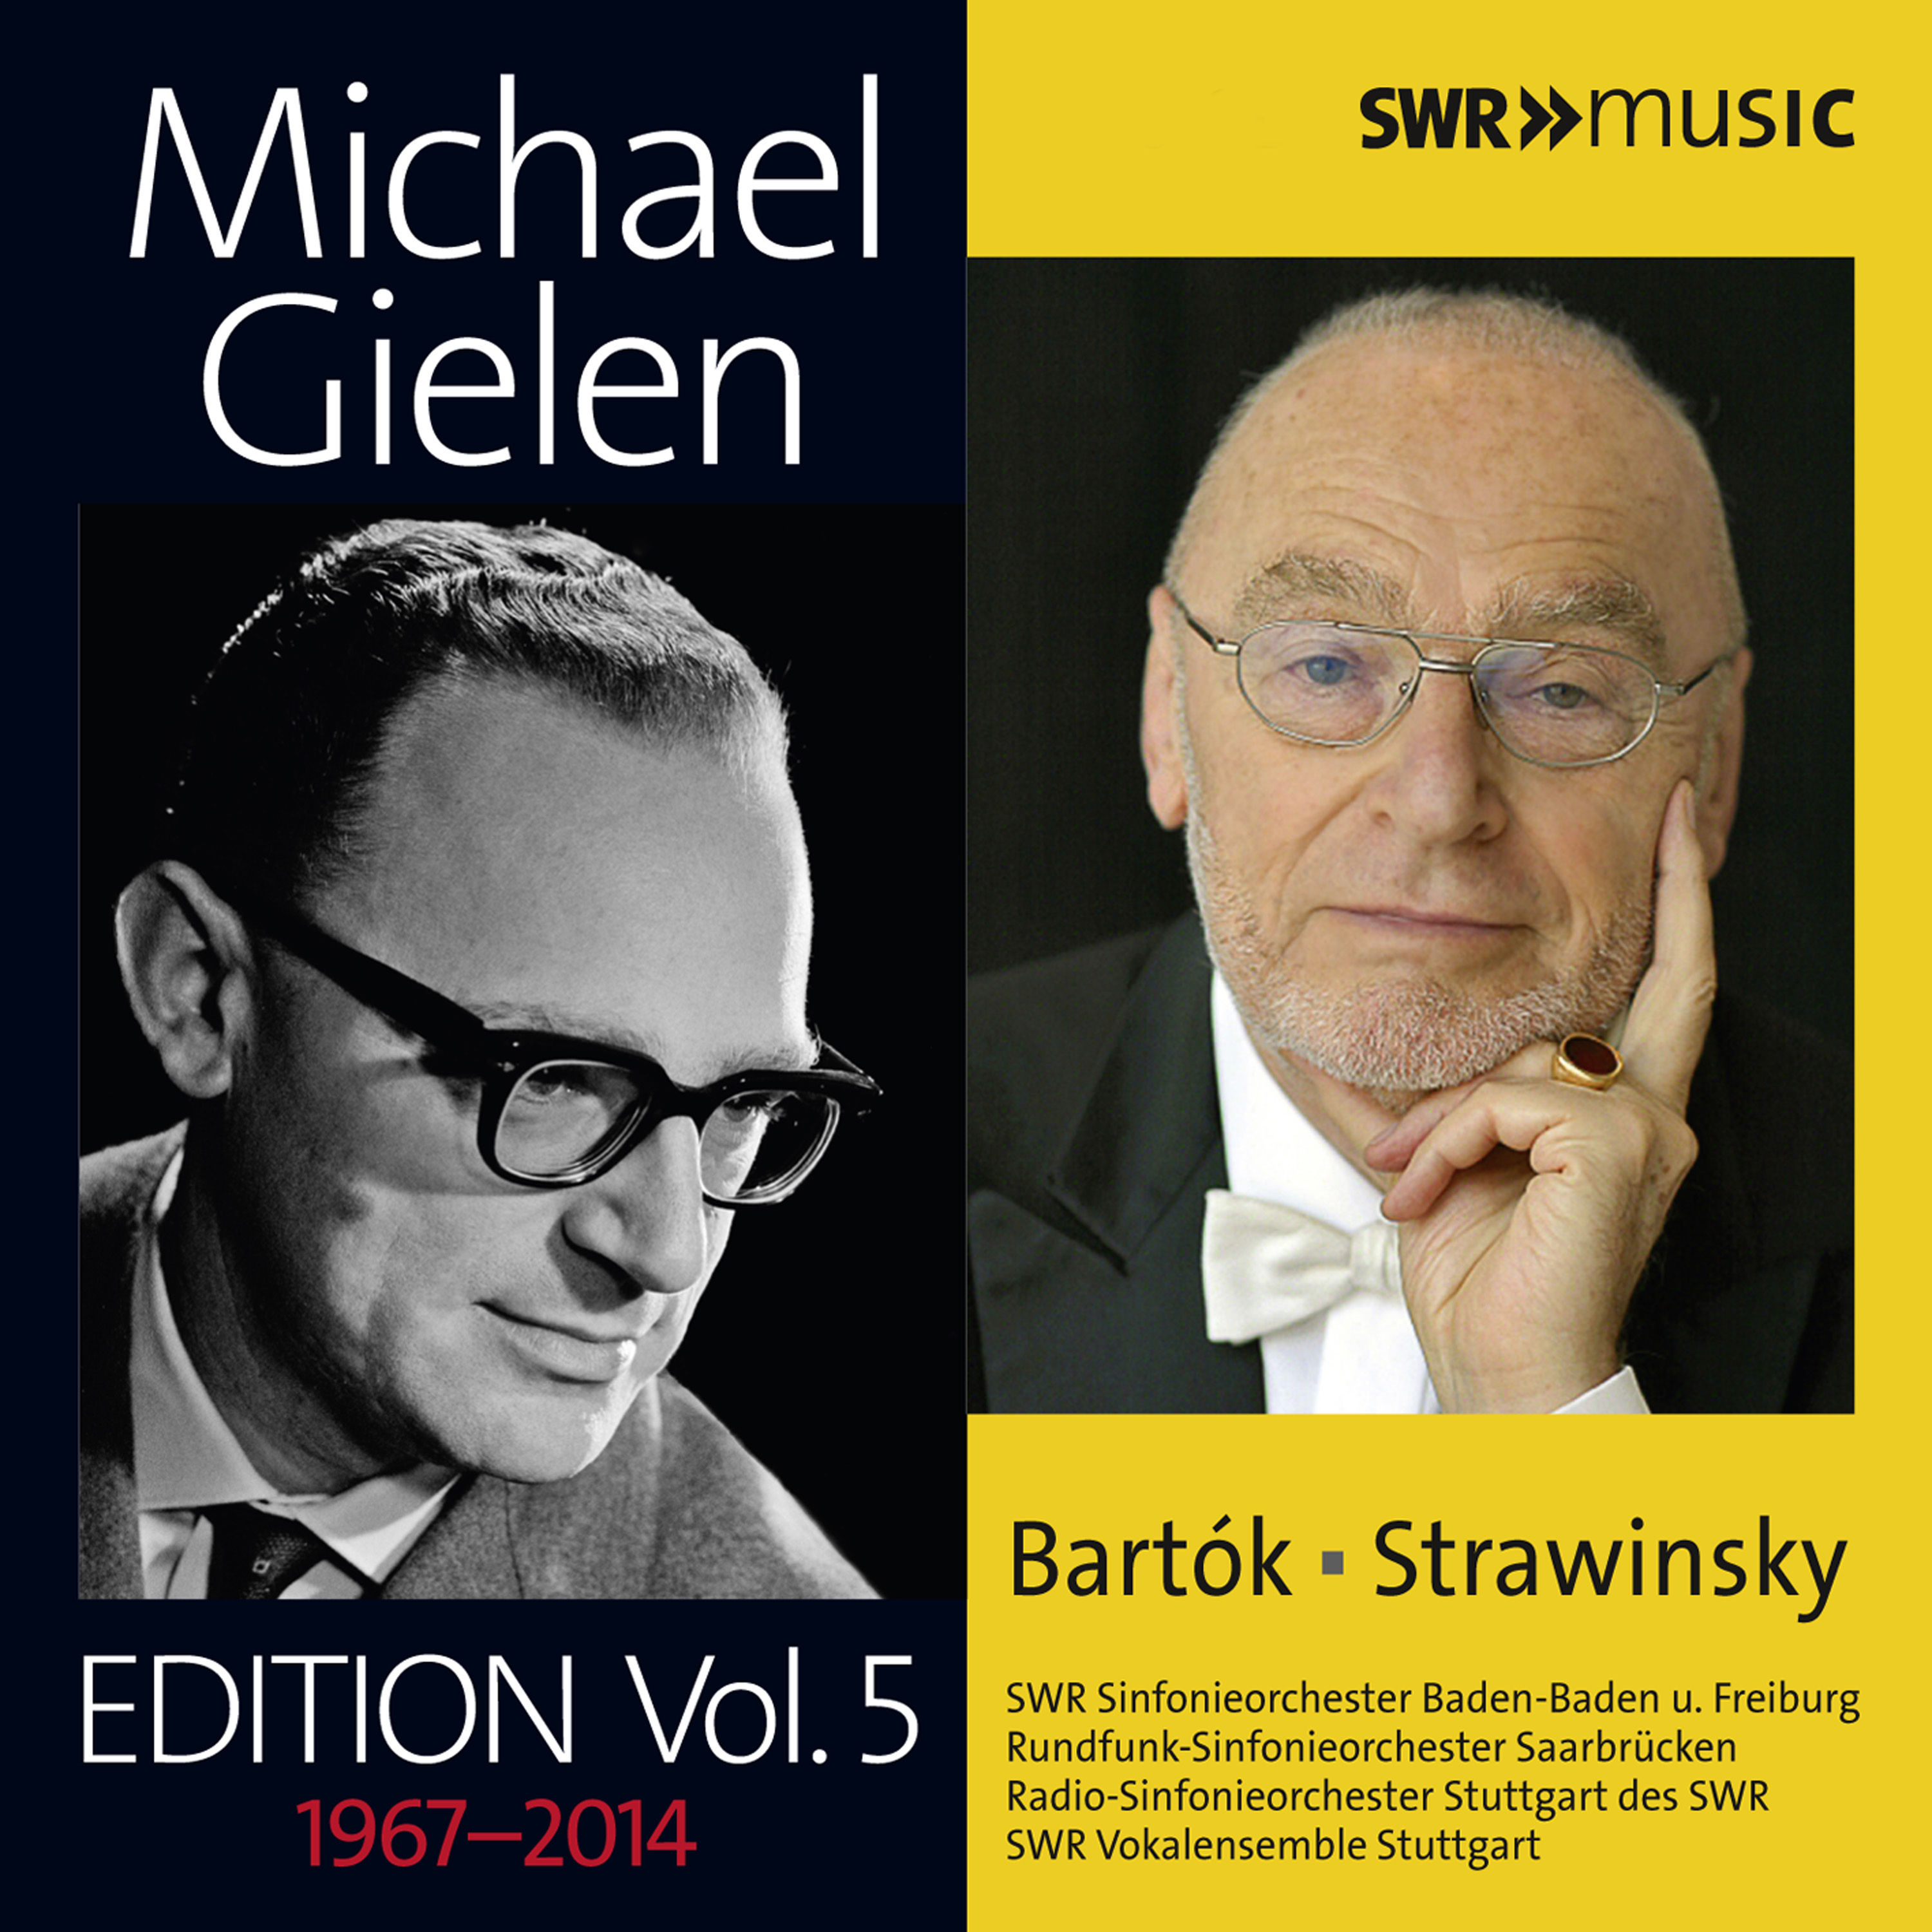 SWR Sinfonieorchester - Michael Gielen Edition Vol. 5 cd01 Bartók ▪ Strawinsky